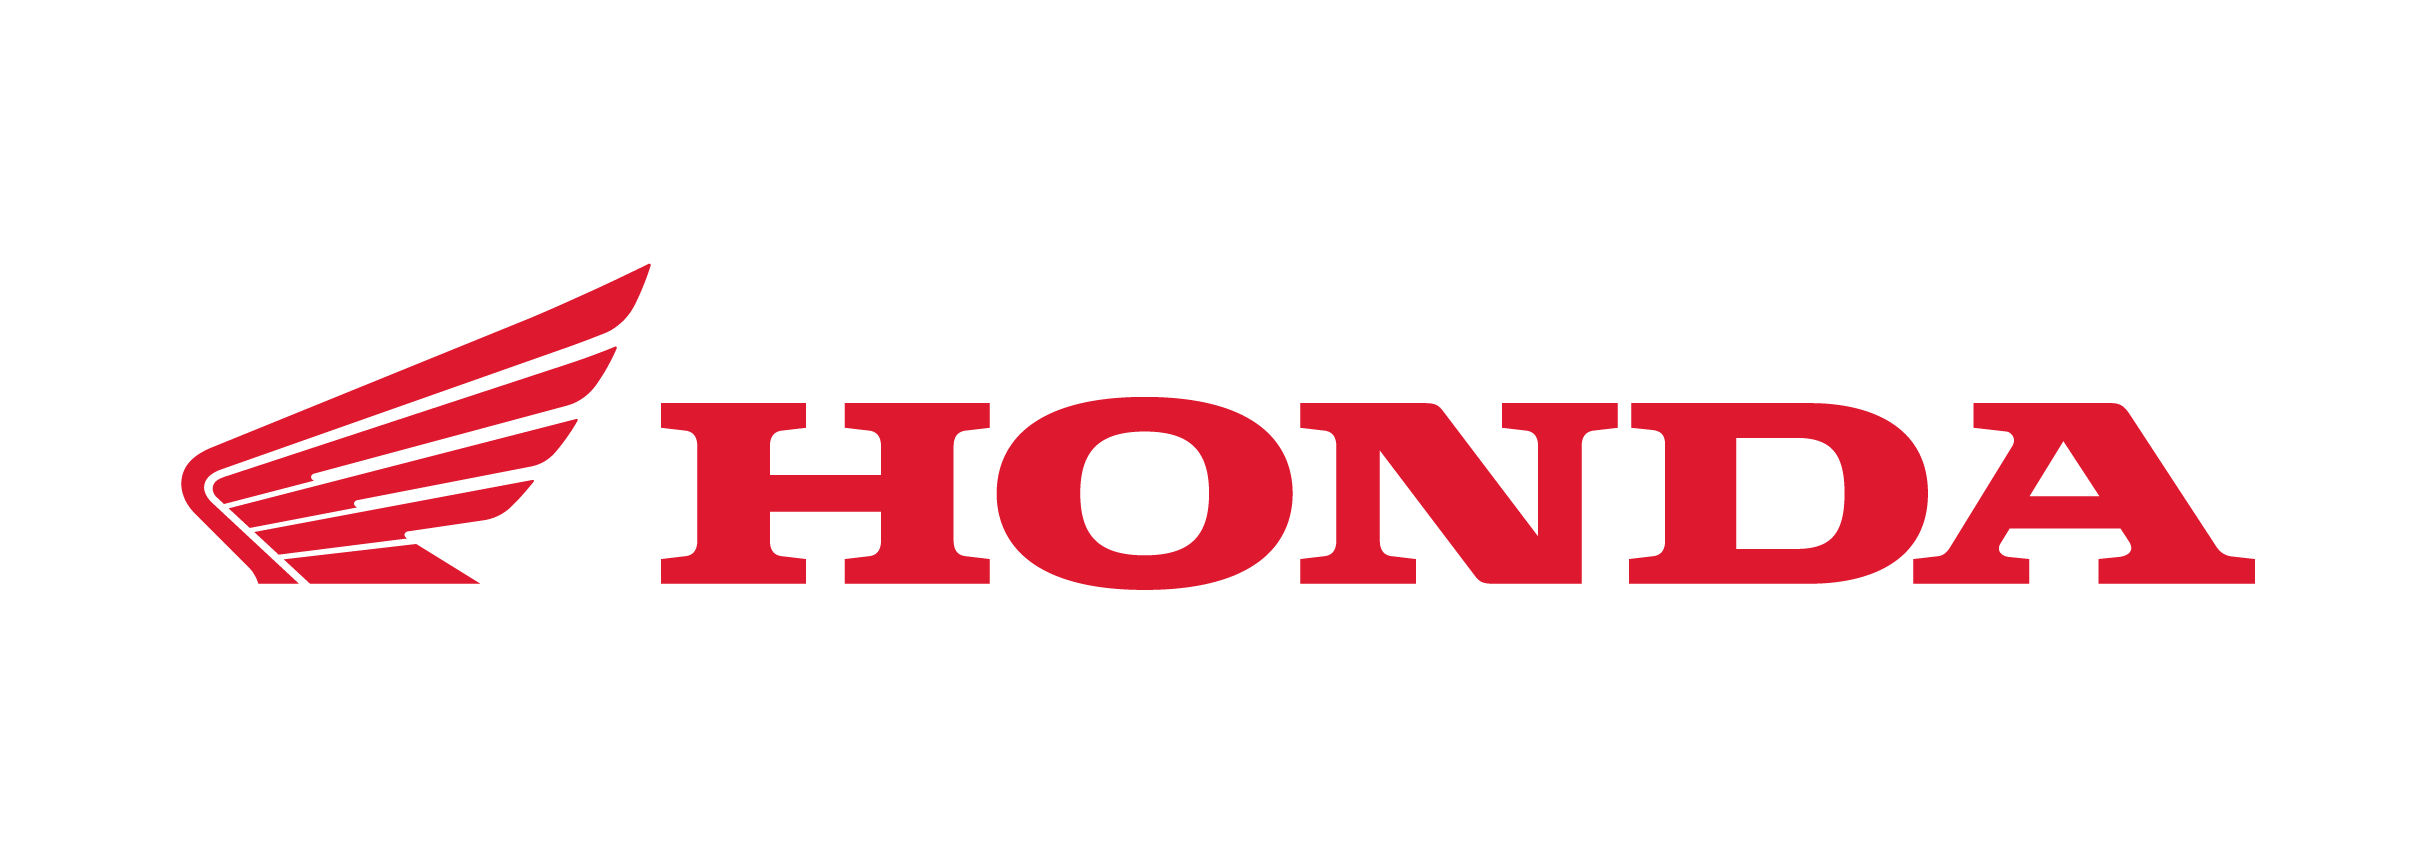 Honda motor co ltd stock